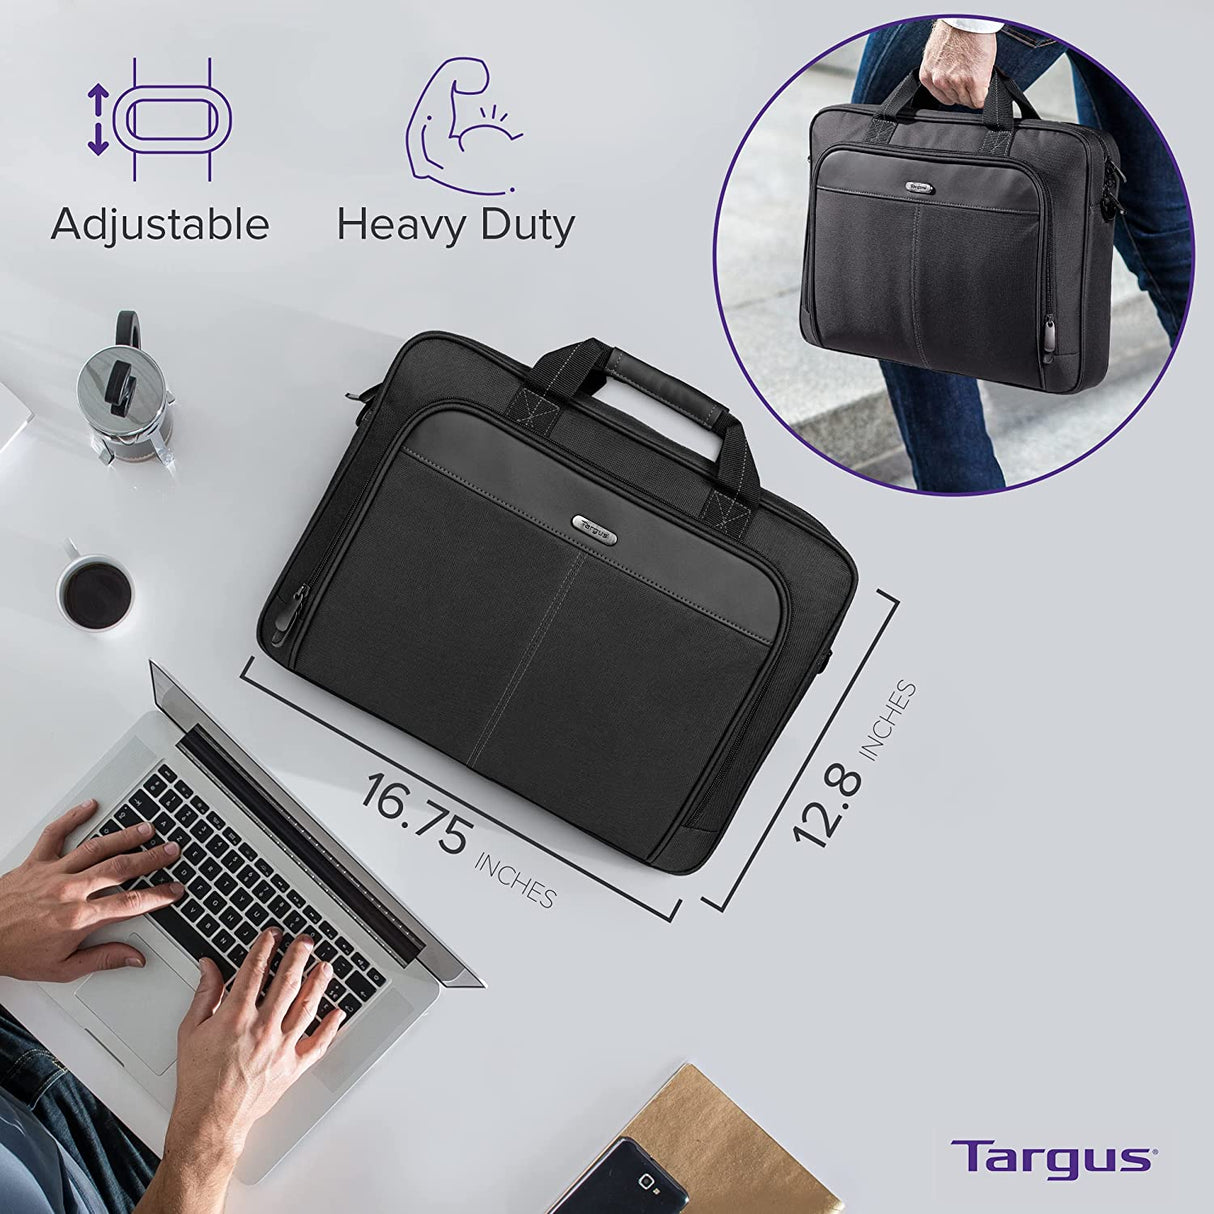 KROSER™ 15.6 Inch Rollable Laptop Briefcase